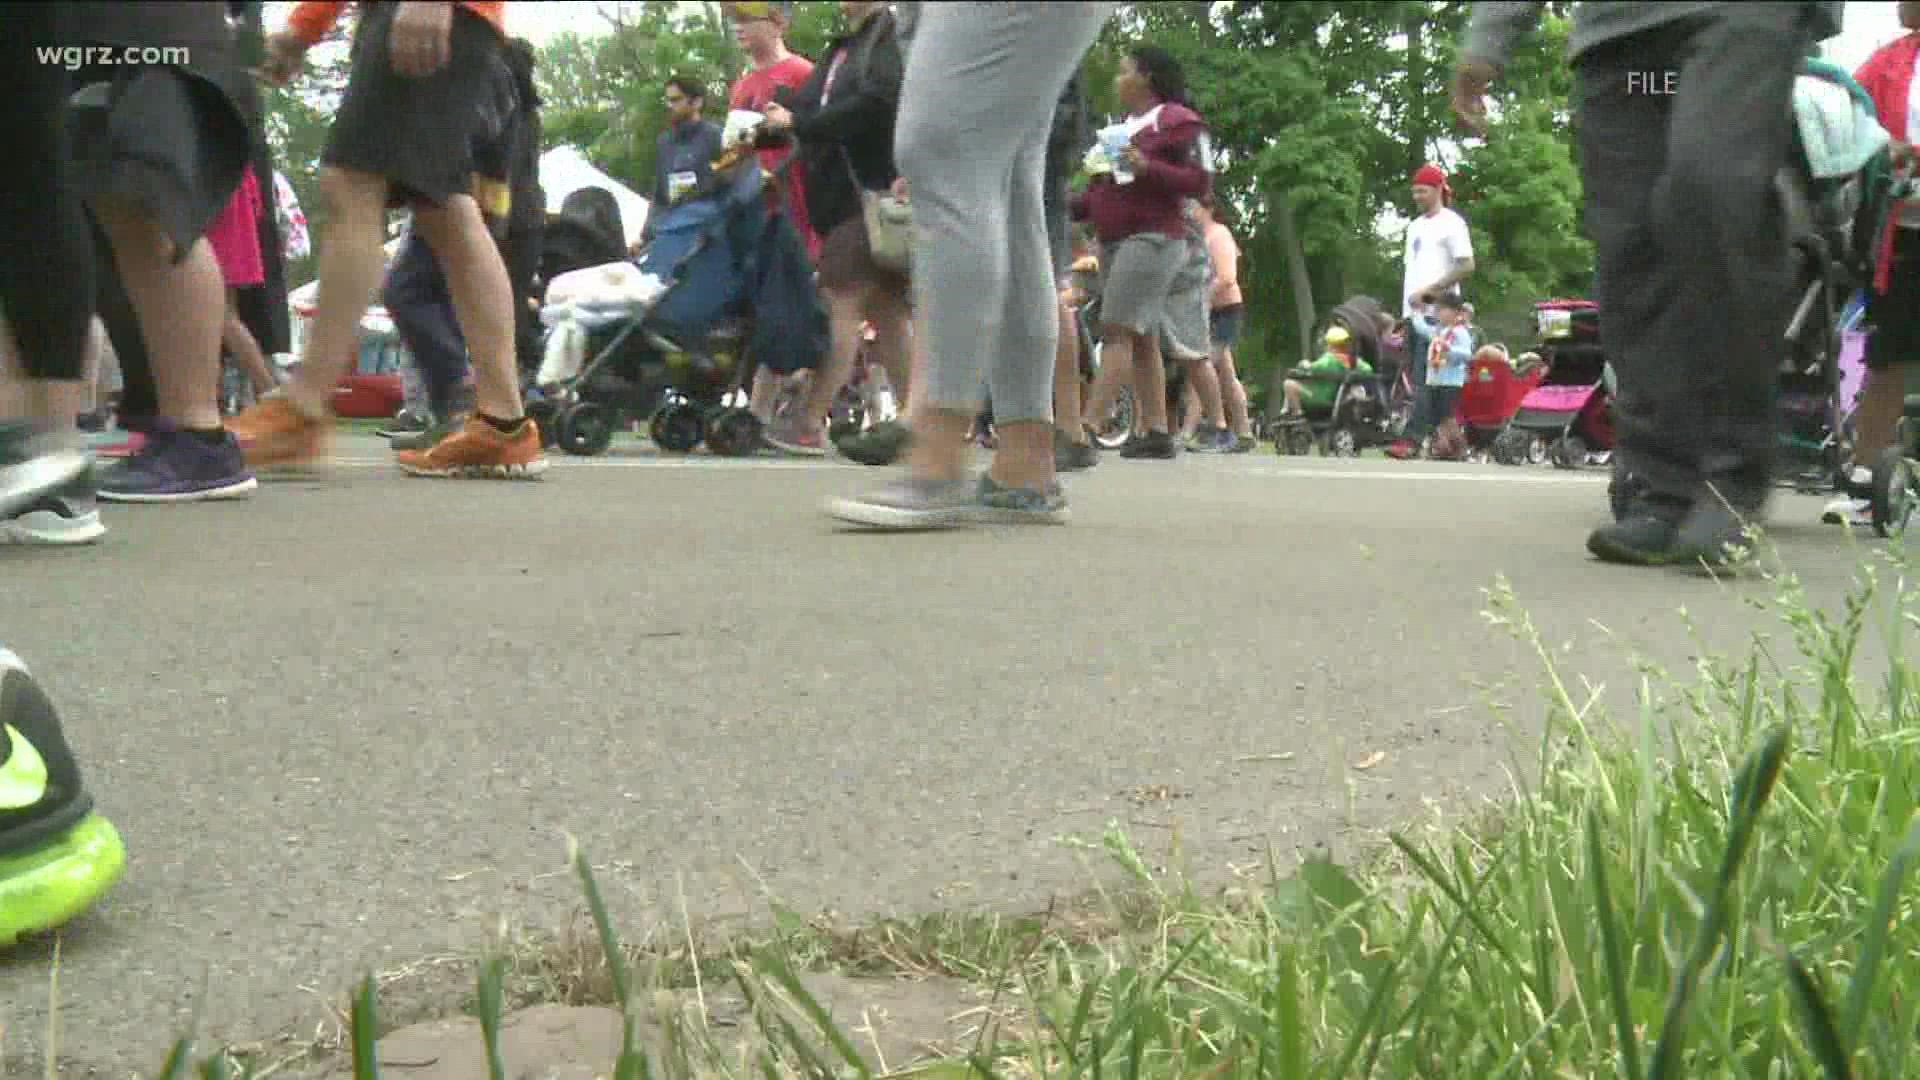 Kids Run in Delaware Park returns June 4th